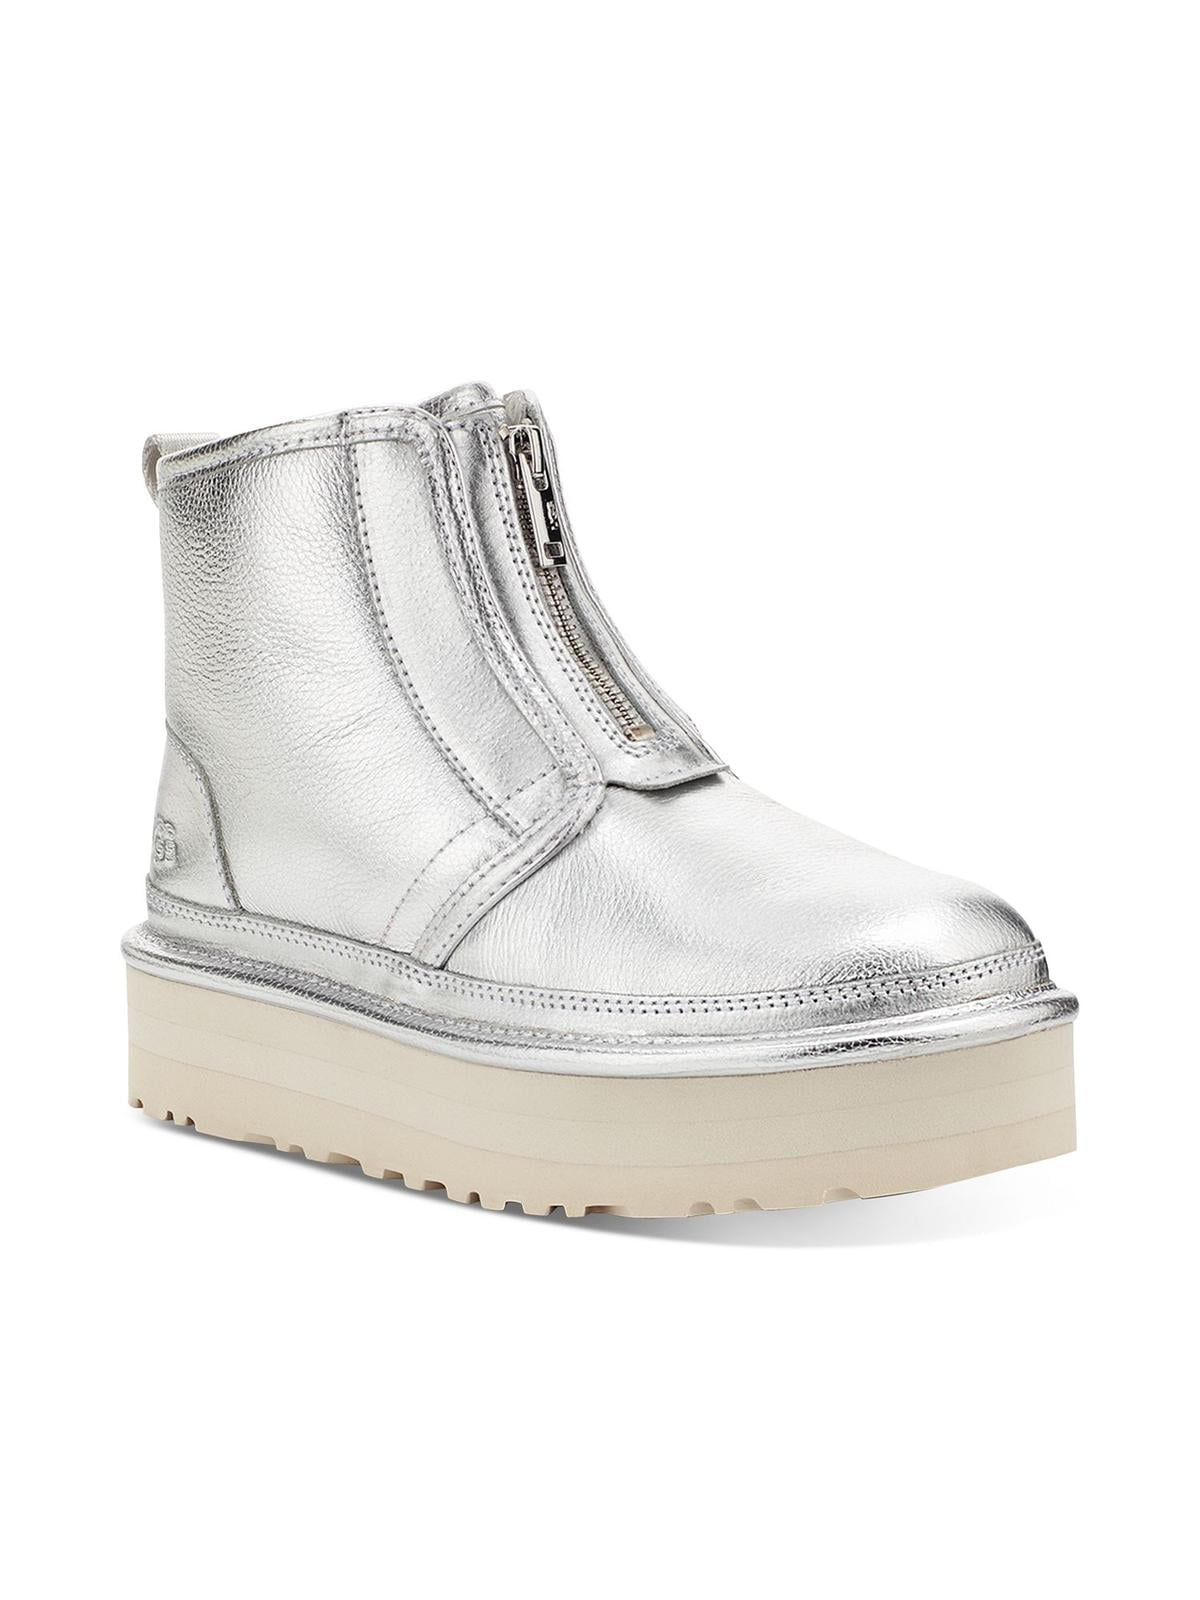 Banzai wol platform Ugg Womens Neumel Platform Zip Leather Ankle Boots Silver 9 Medium (B,M) -  Walmart.com